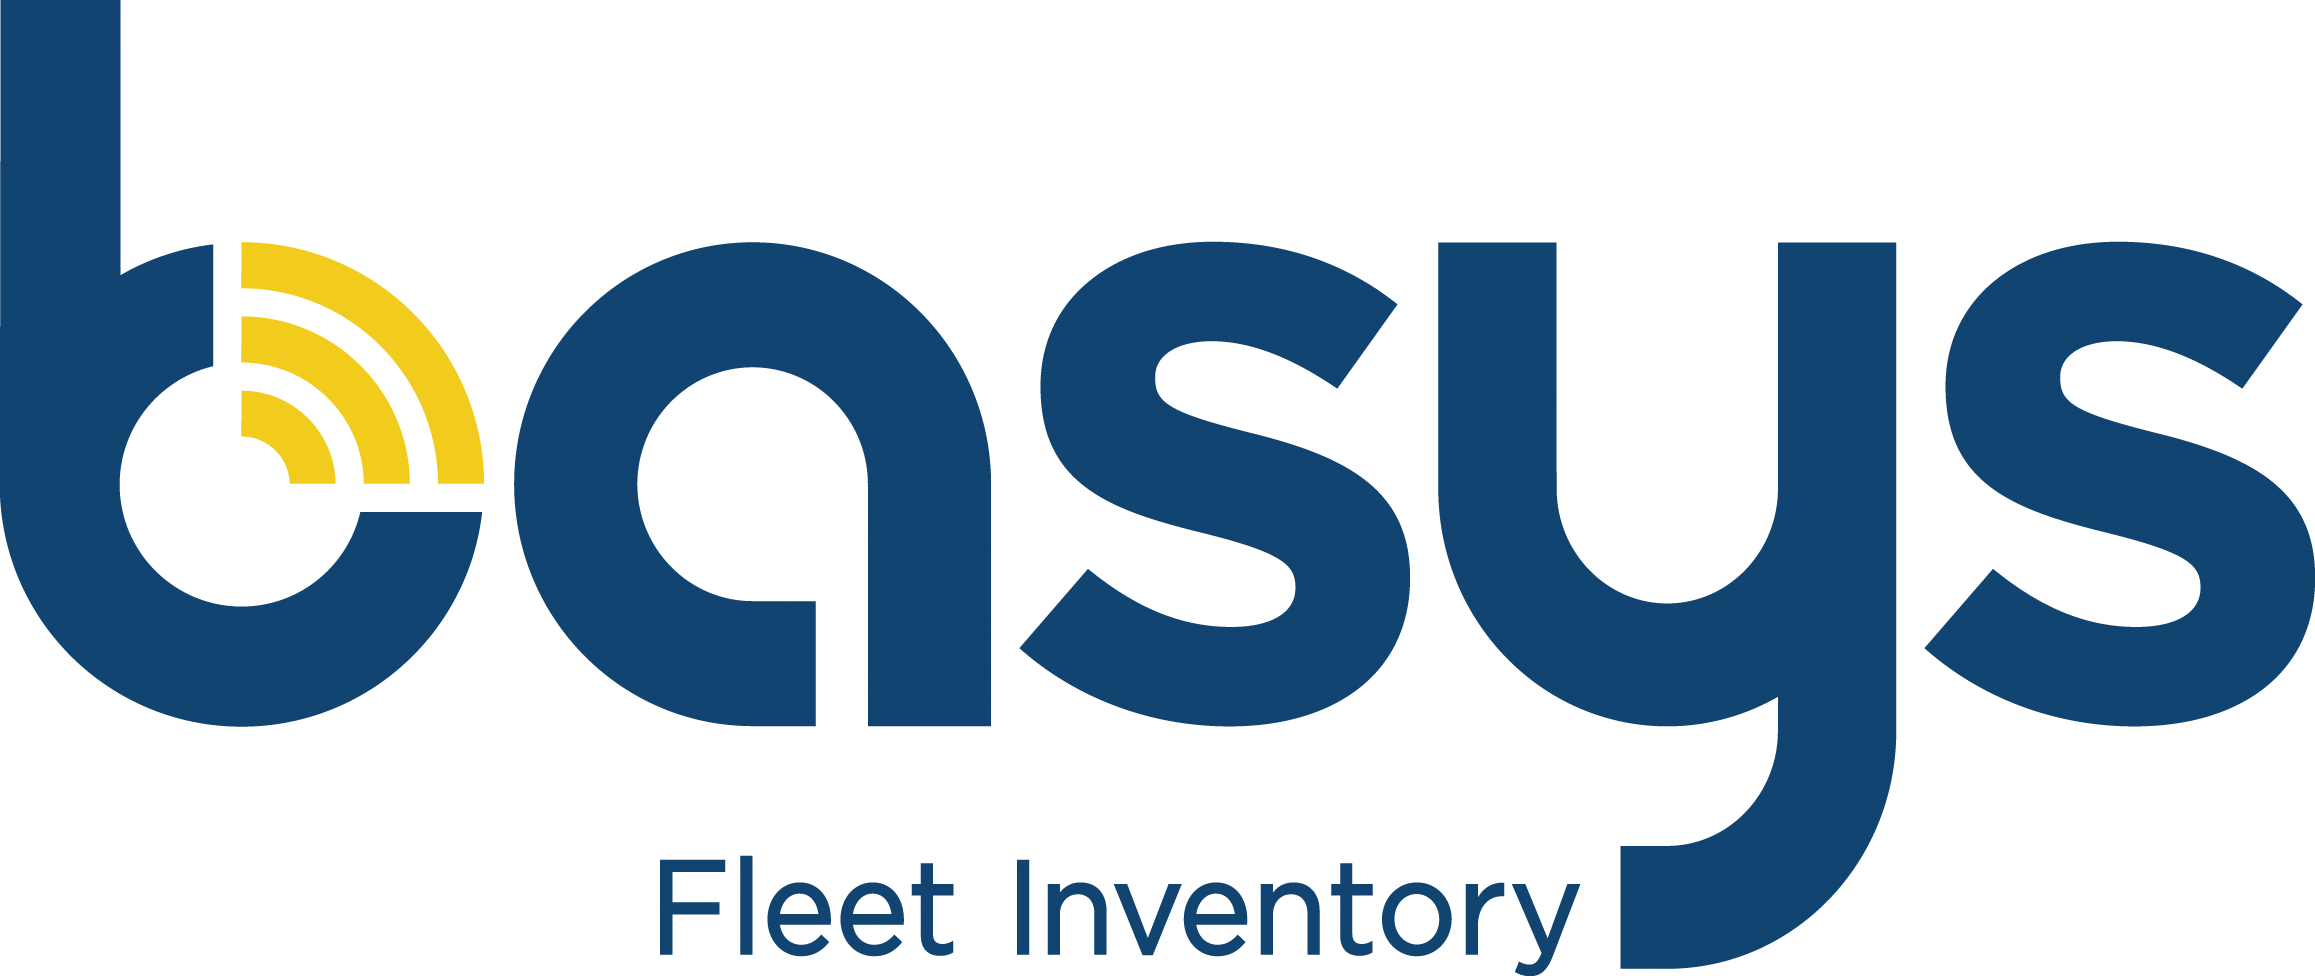 BASys Fleet Inventory